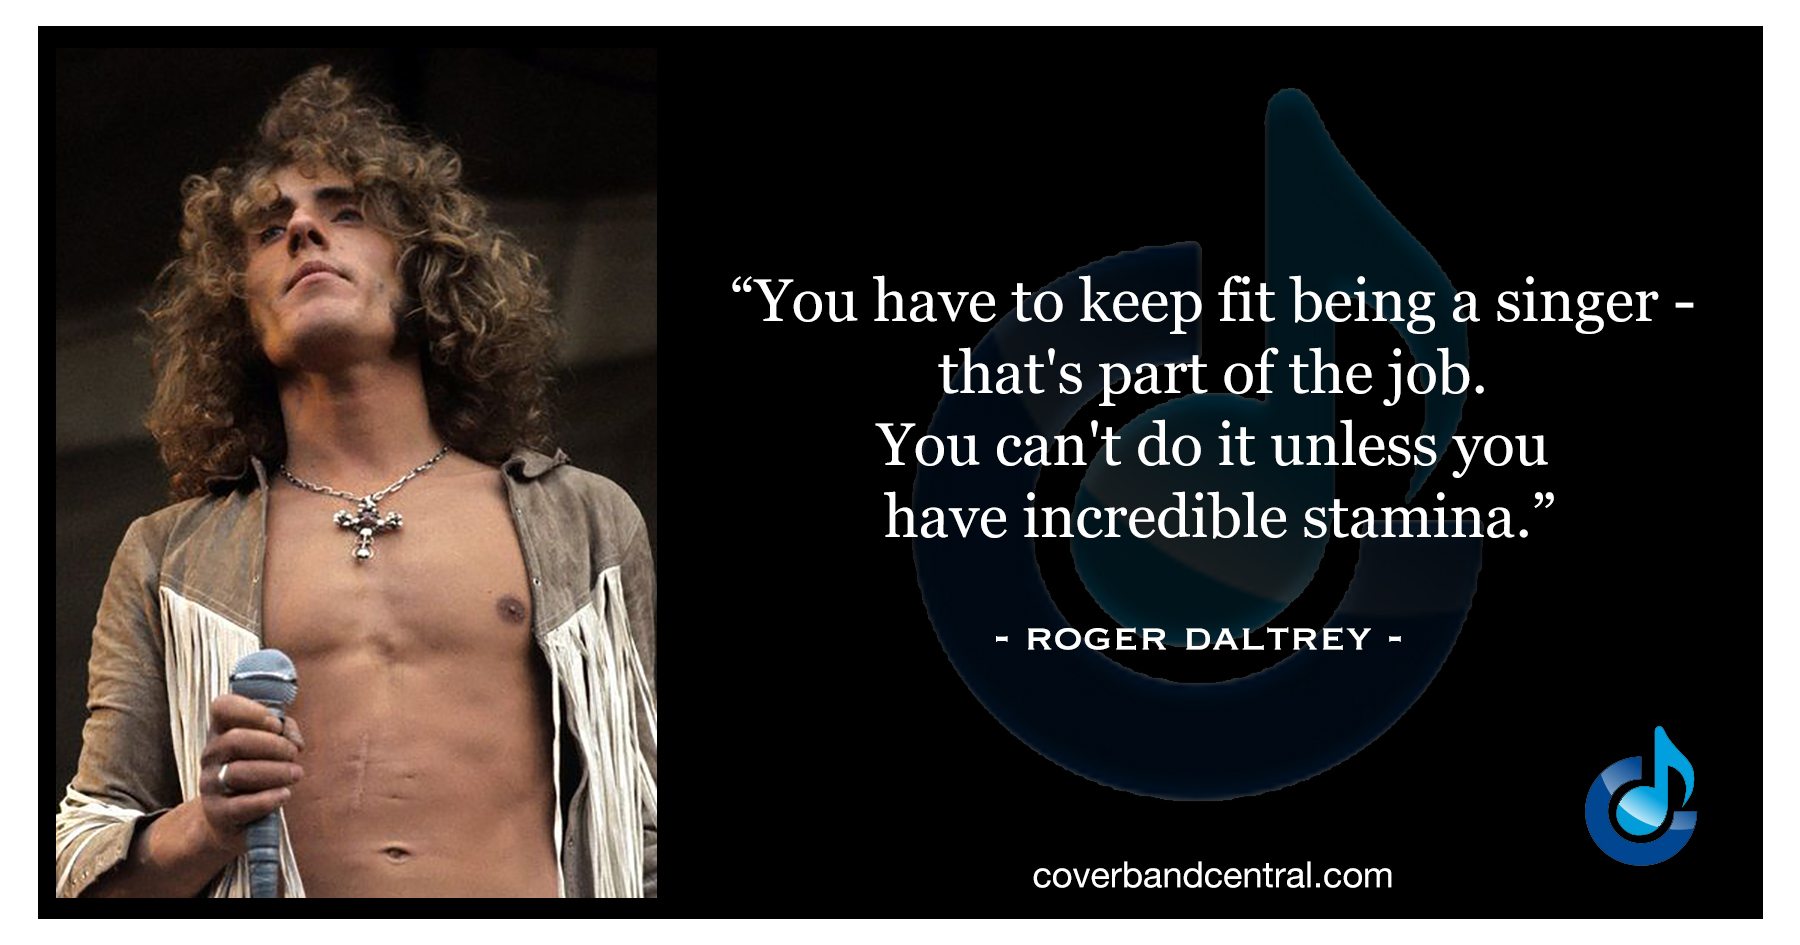 Roger Daltrey quote